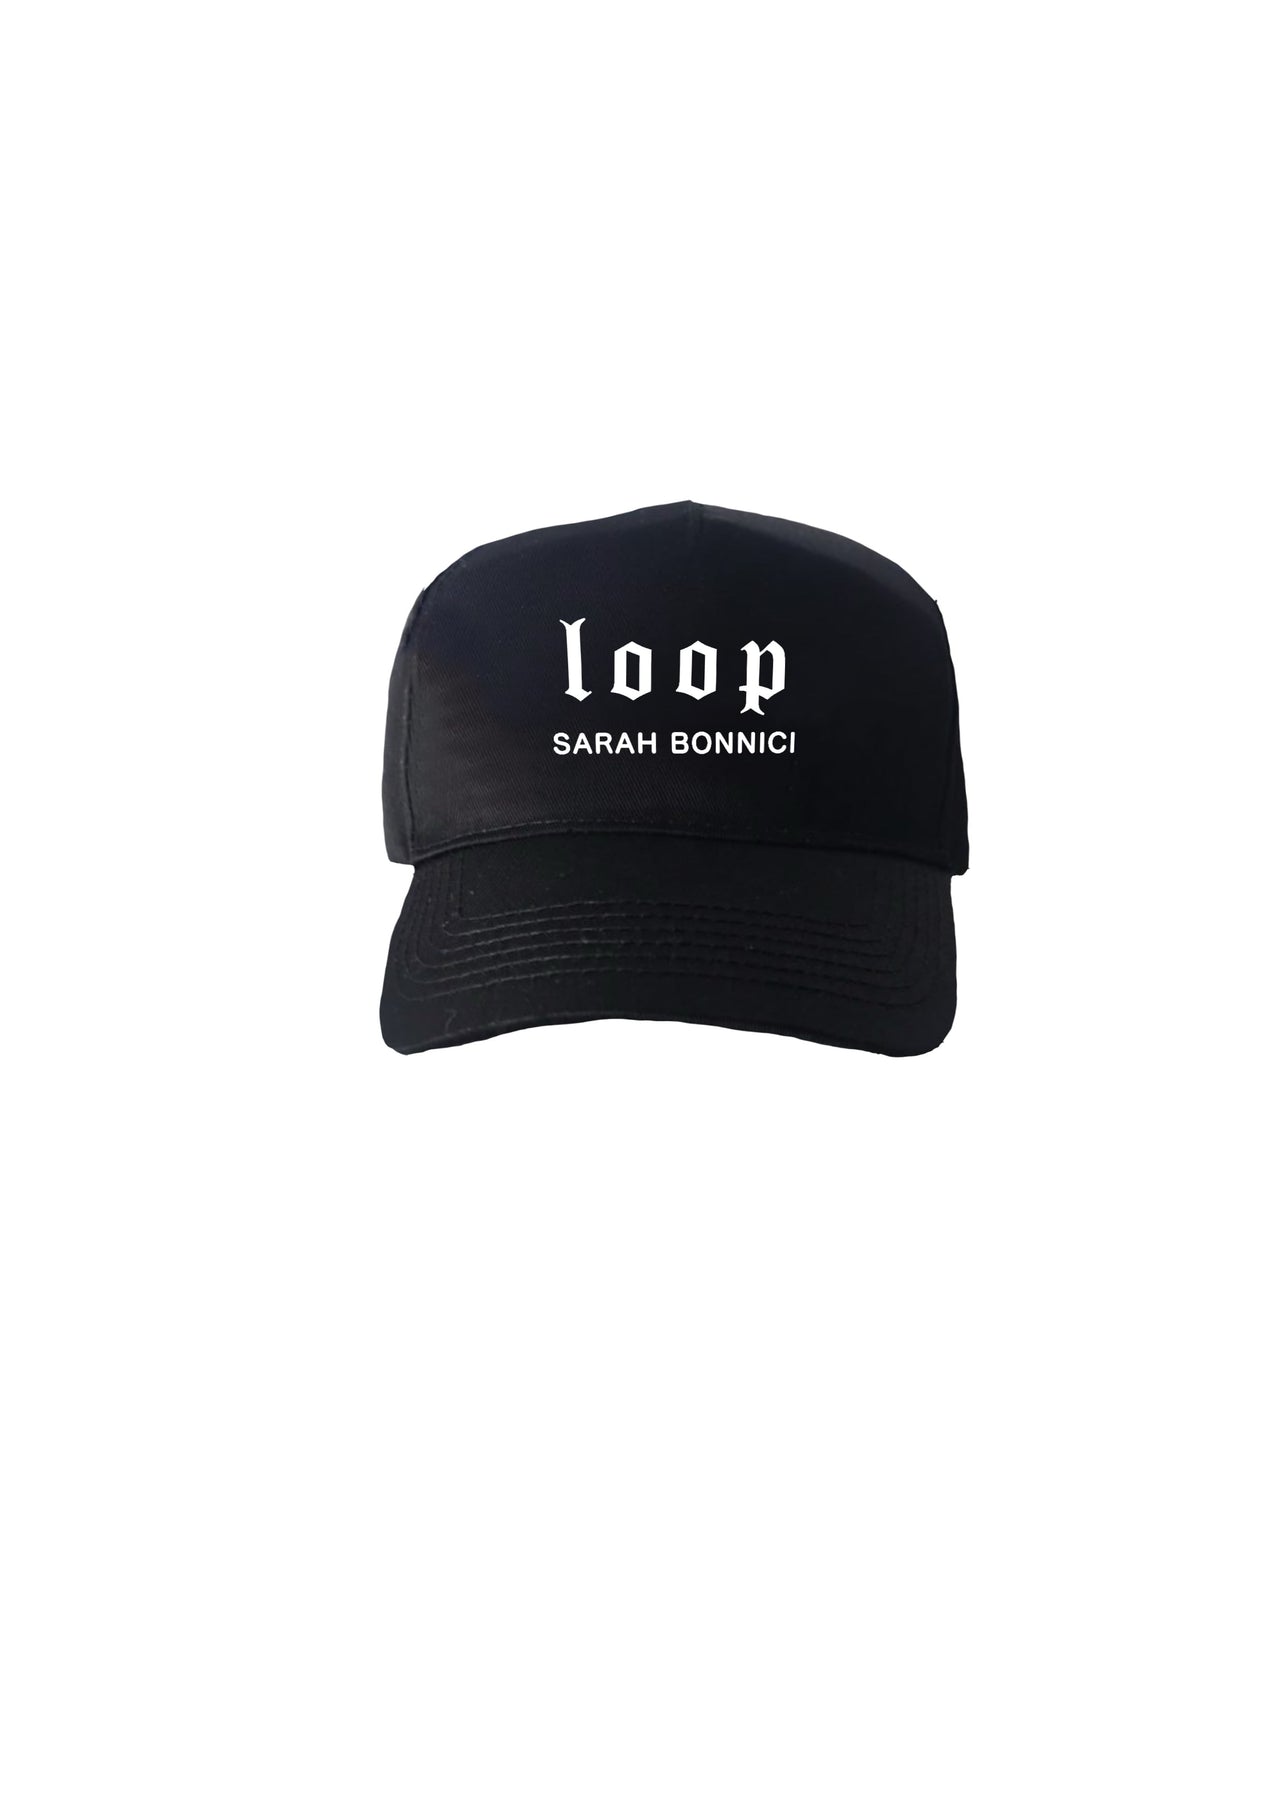 LOOP (SARAH BONNICI) CAP BLACK